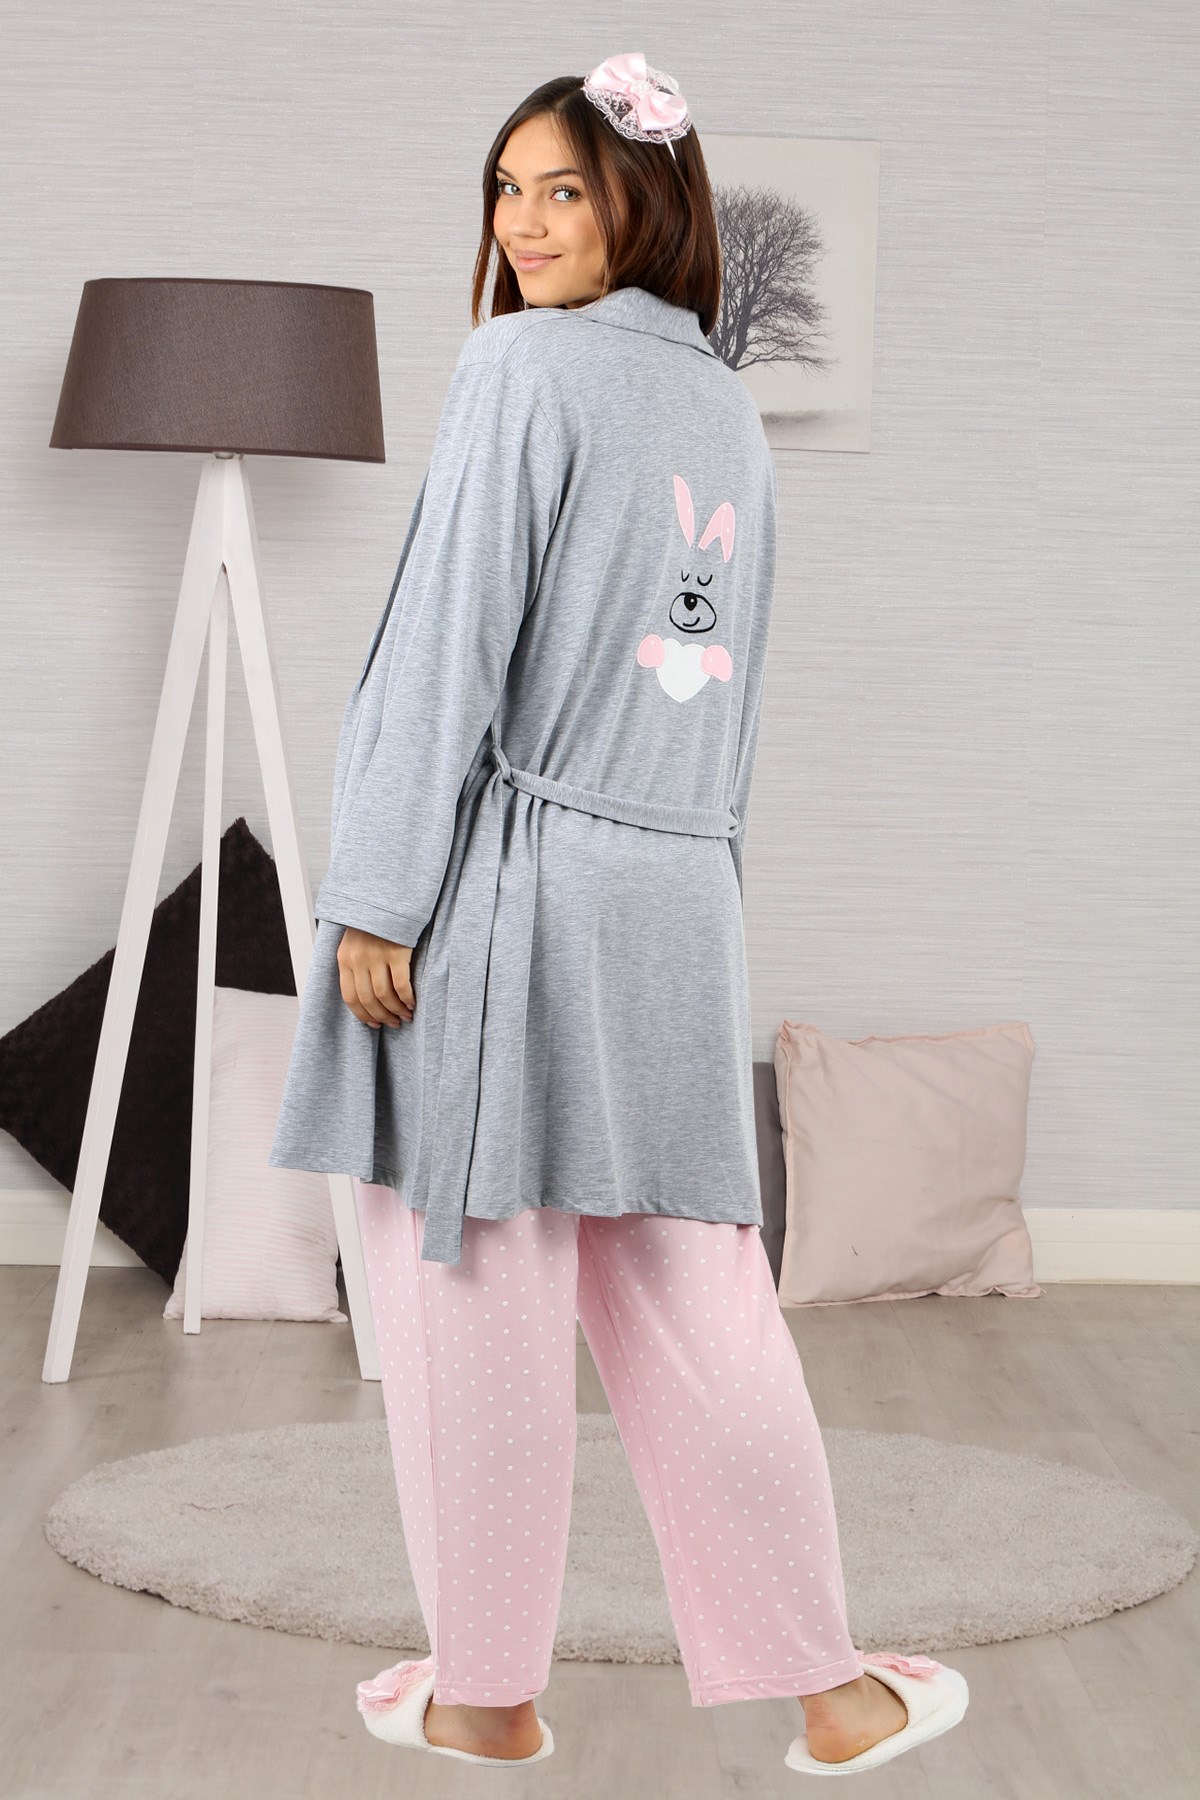 Lohusahamile 30900 Pink Rabbit Patterned Gray Maternity Nursing Pajamas Set  with Robe